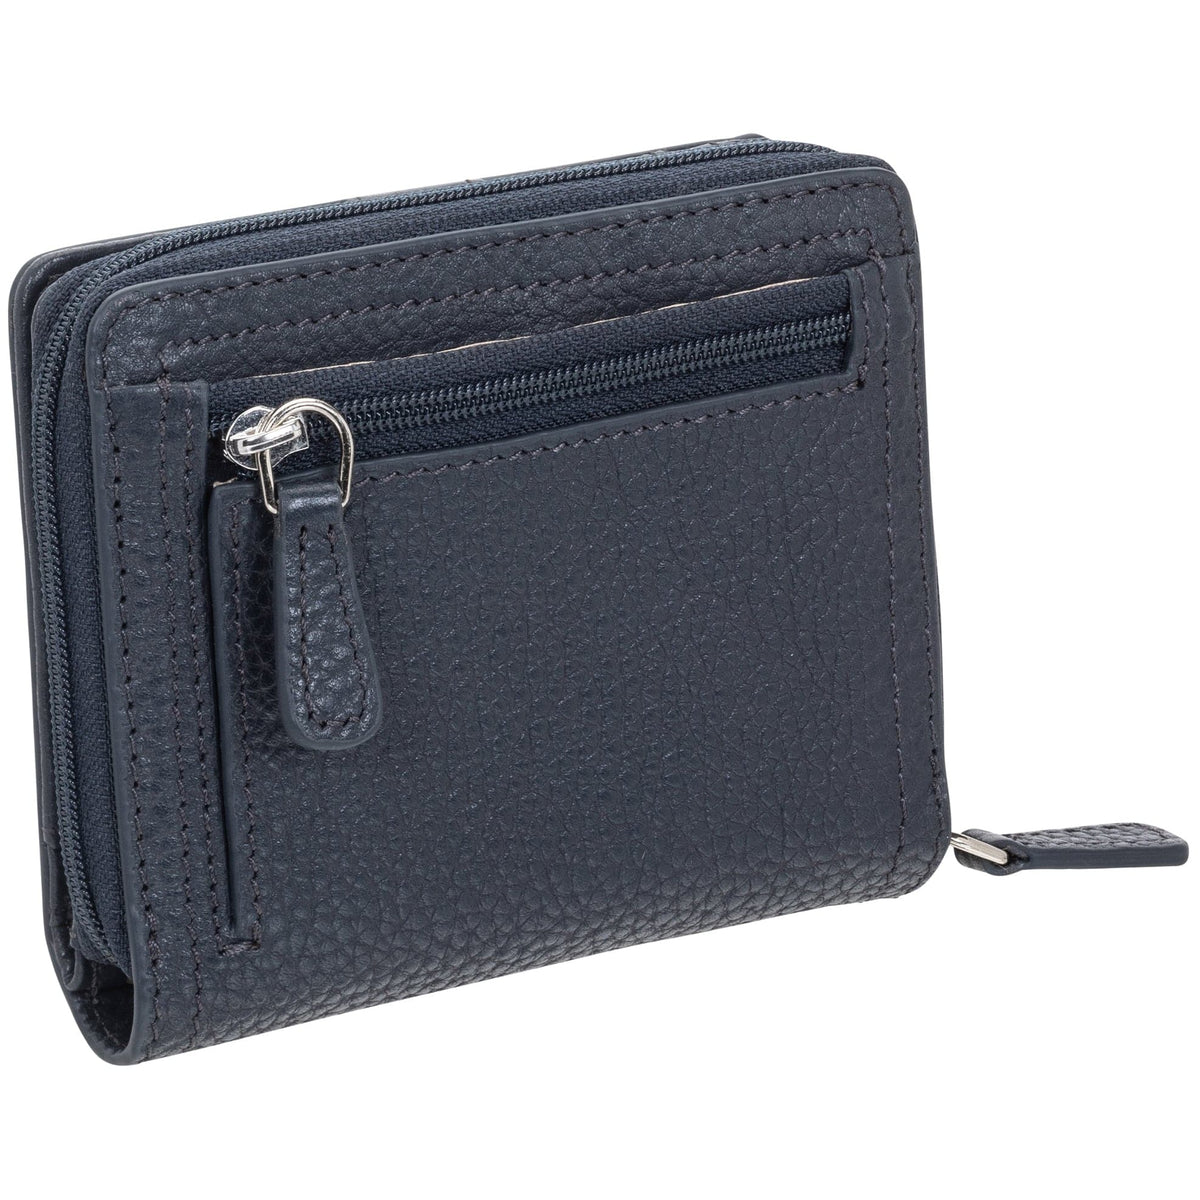 Mancini Pebbled Ladies’ RFID Small Clutch Wallet